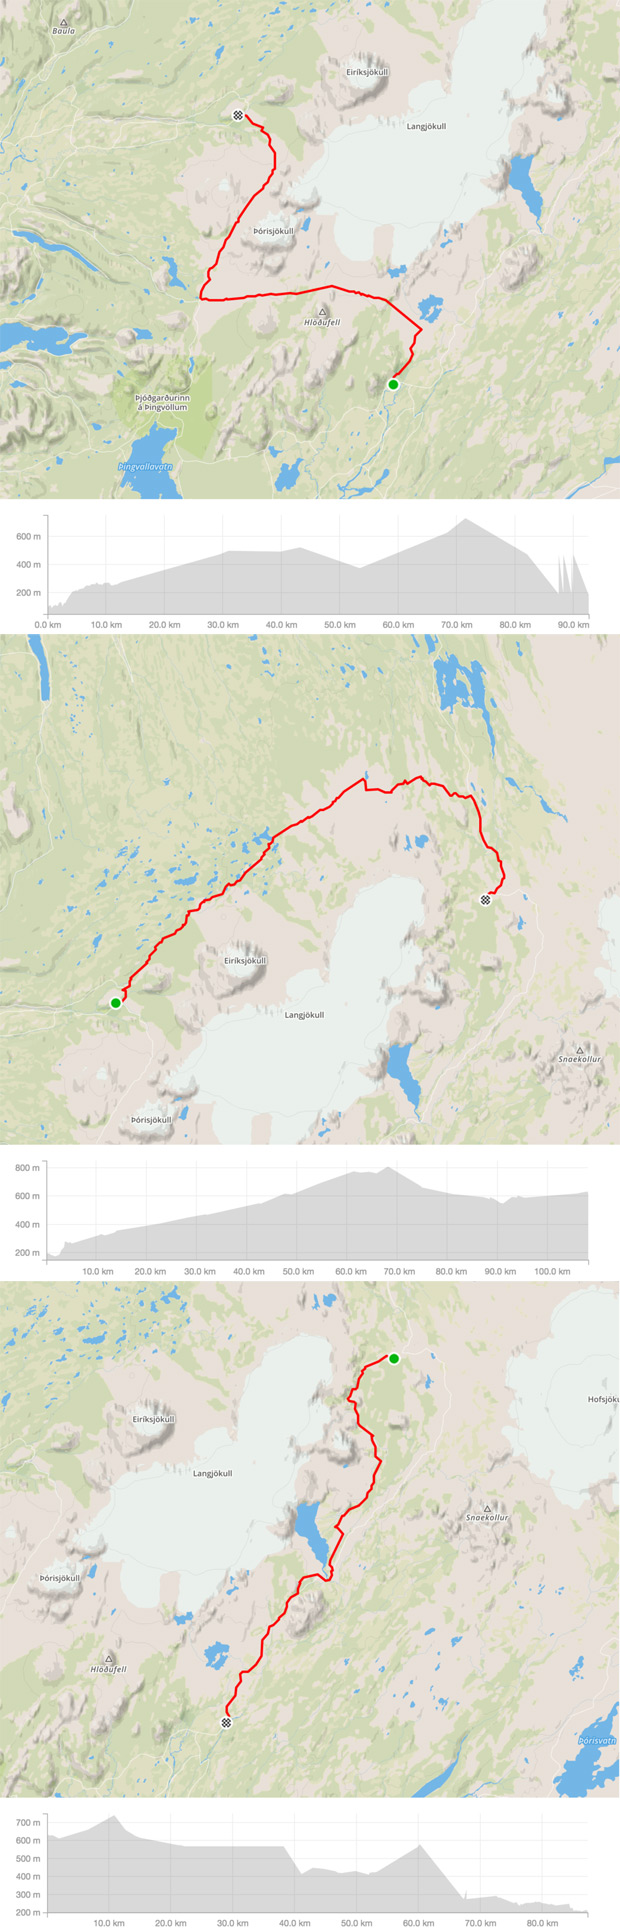 Glacier 360, la primera prueba por etapas para bicicletas de montaña disputada en Islandia